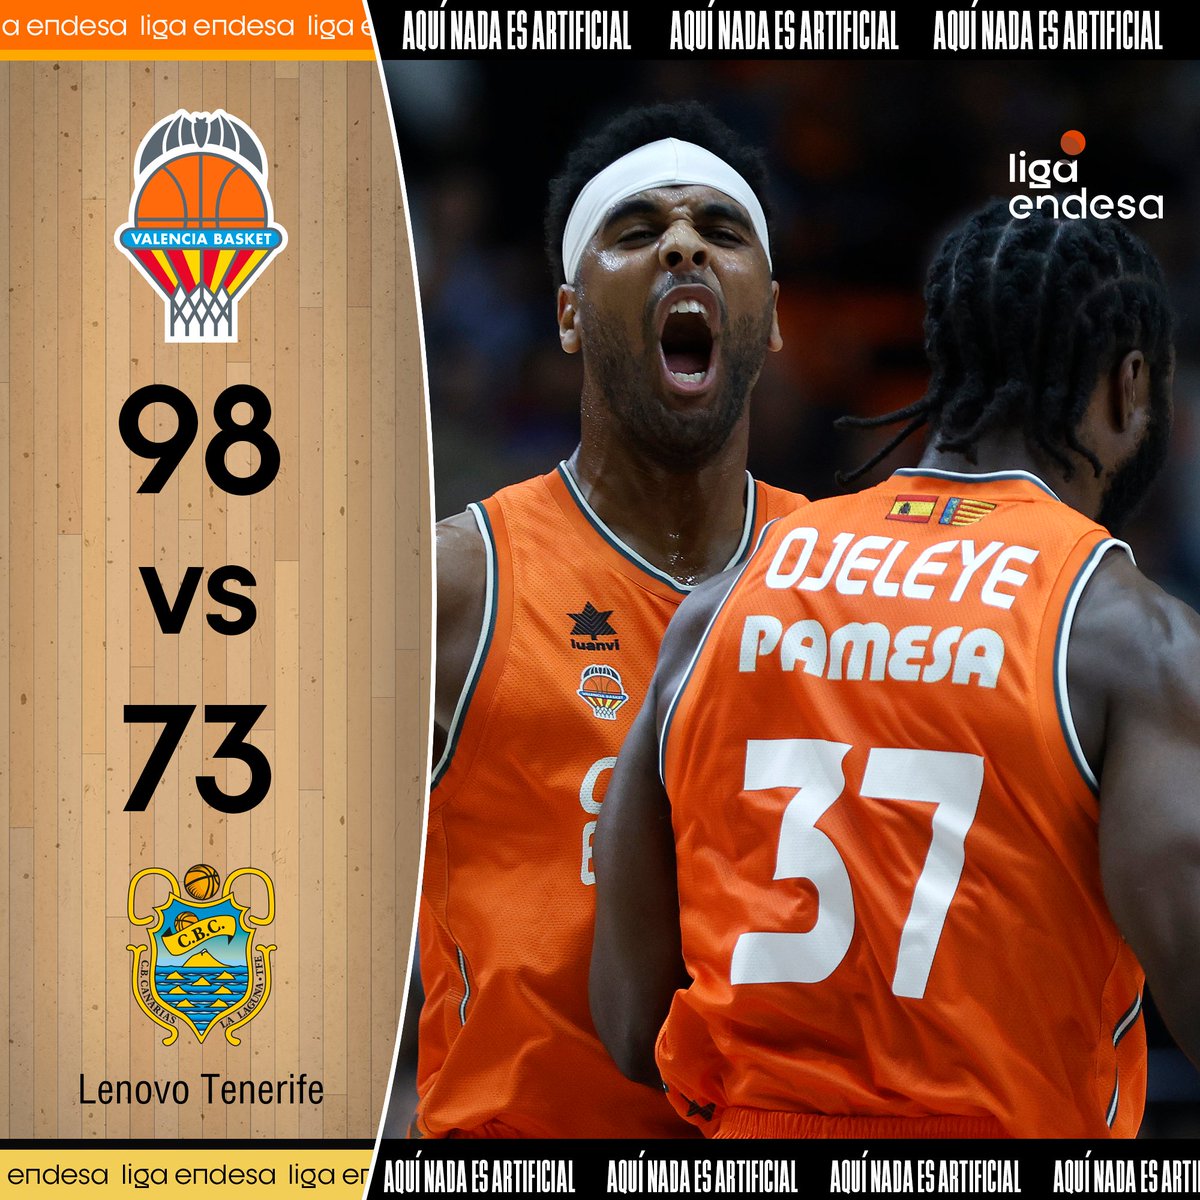 Valencia Basket vence contundentemente a Lenovo Tenerife para seguir luchando por ser cabeza de serie en el #PlayoffLigaEndesa.

9⃣8⃣ @valenciabasket
7⃣3⃣ Lenovo Tenerife @CB1939Canarias 

#LigaEndesa
#Telefonica100